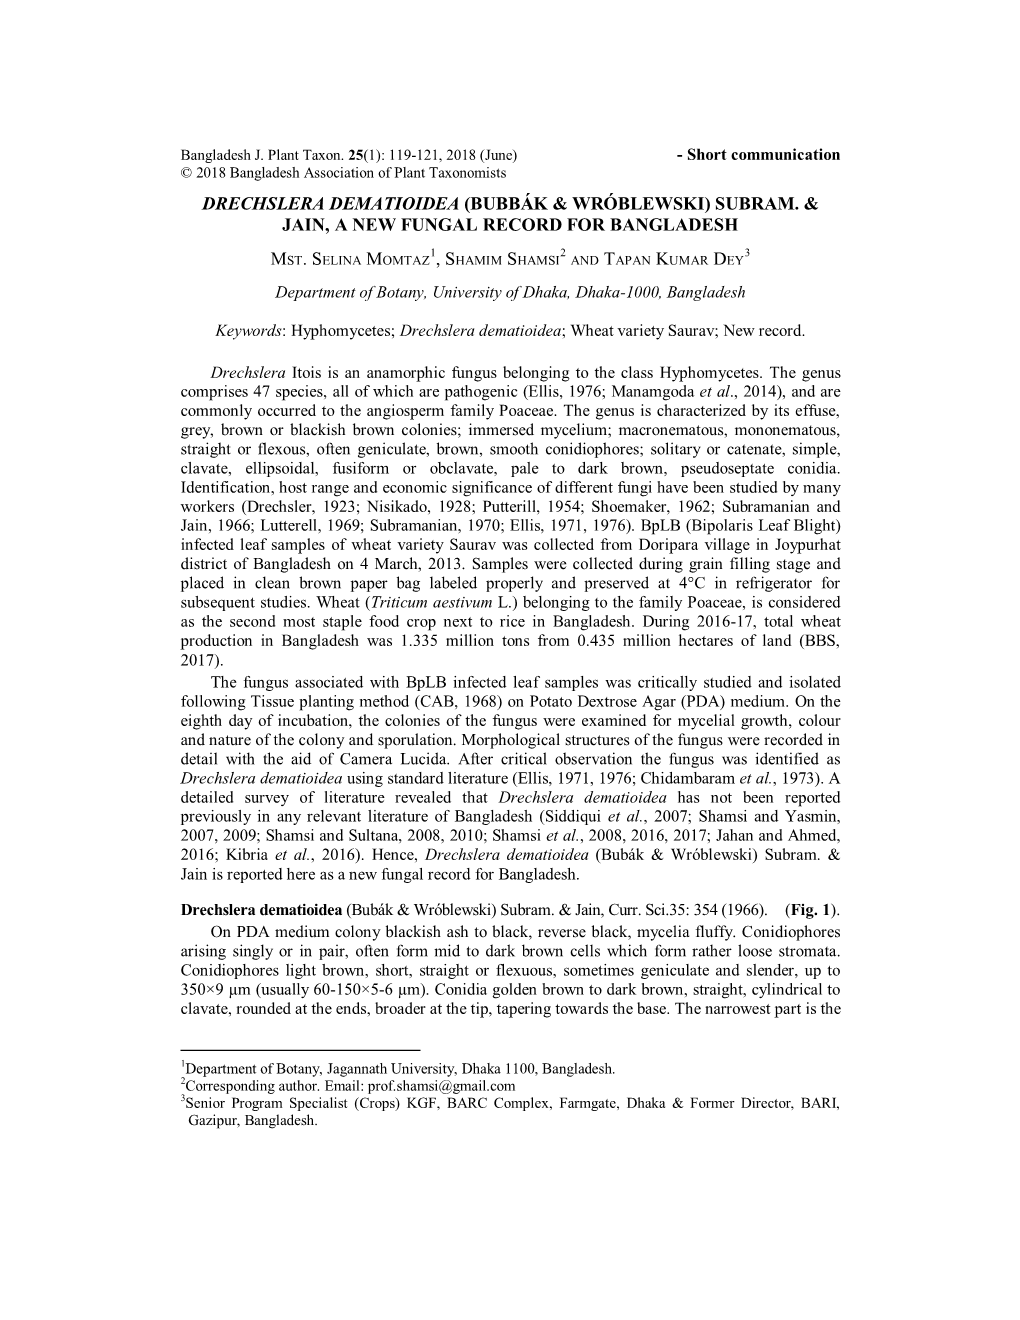 Drechslera Dematioidea (Bubbák & Wróblewski) Subram. & Jain, a New Fungal Record for Bangladesh